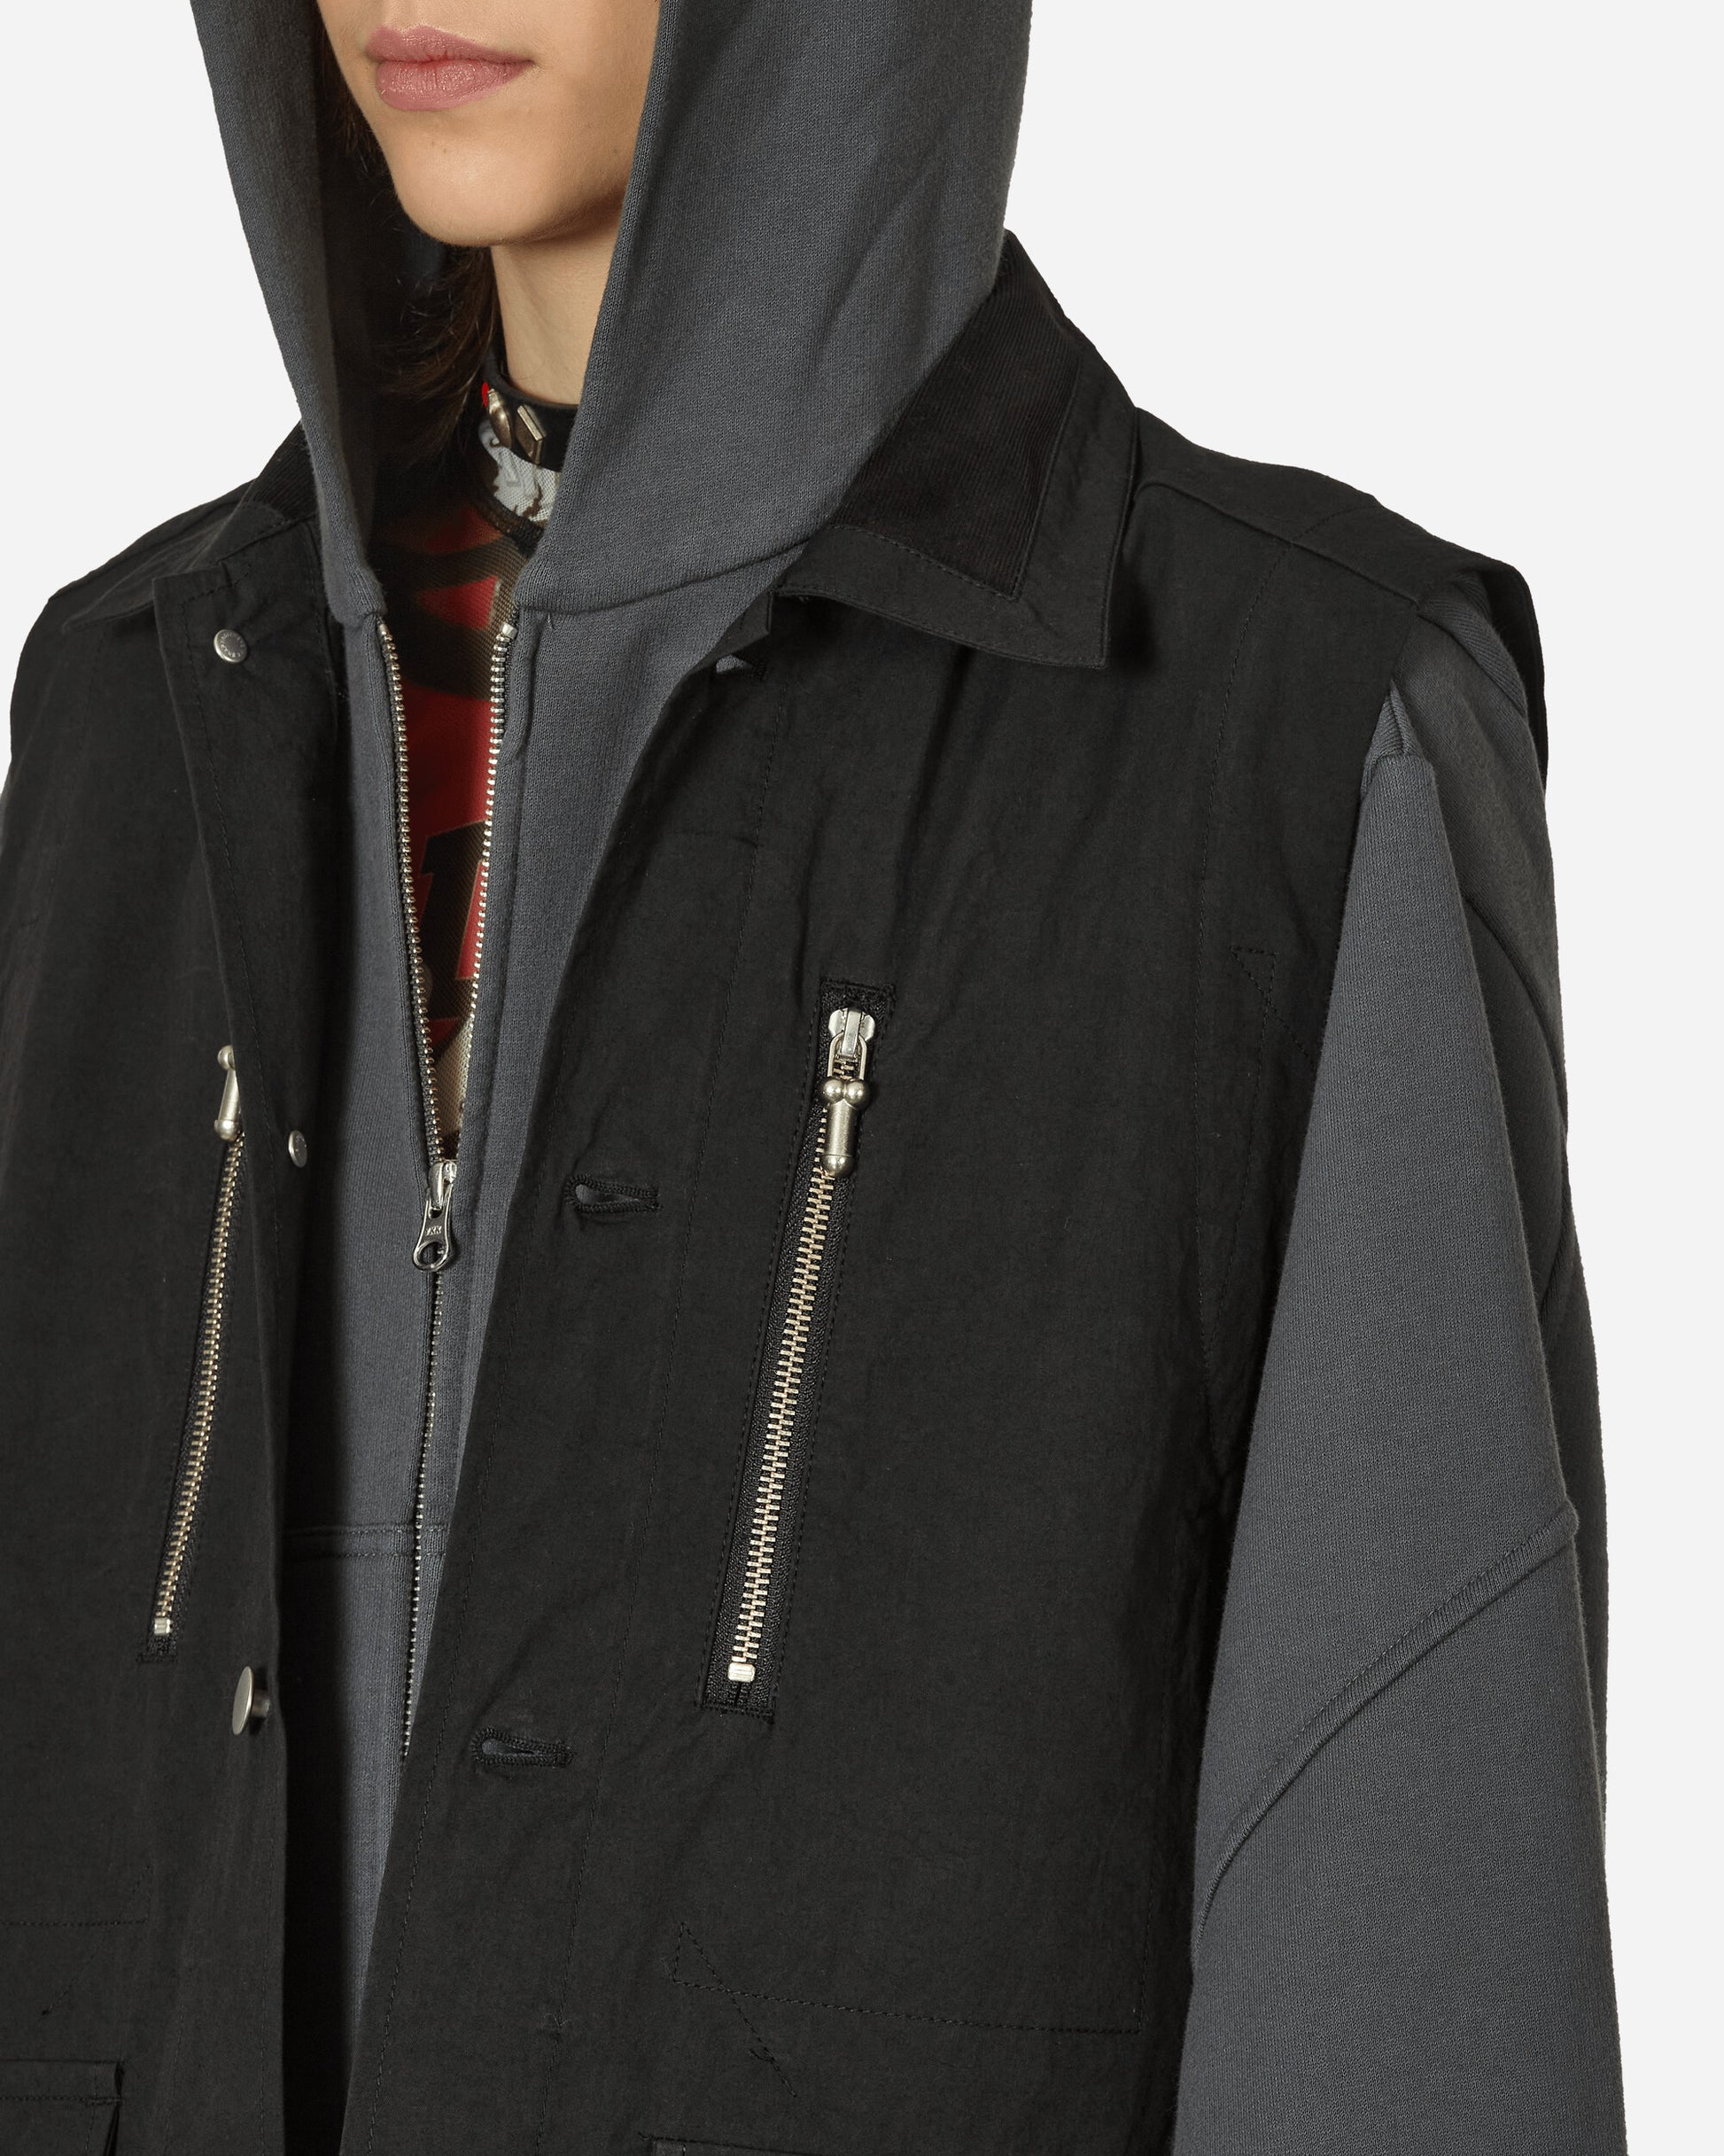 Phingerin P-Zip Vest Black Coats and Jackets Vests PD-241-JK-031 C1